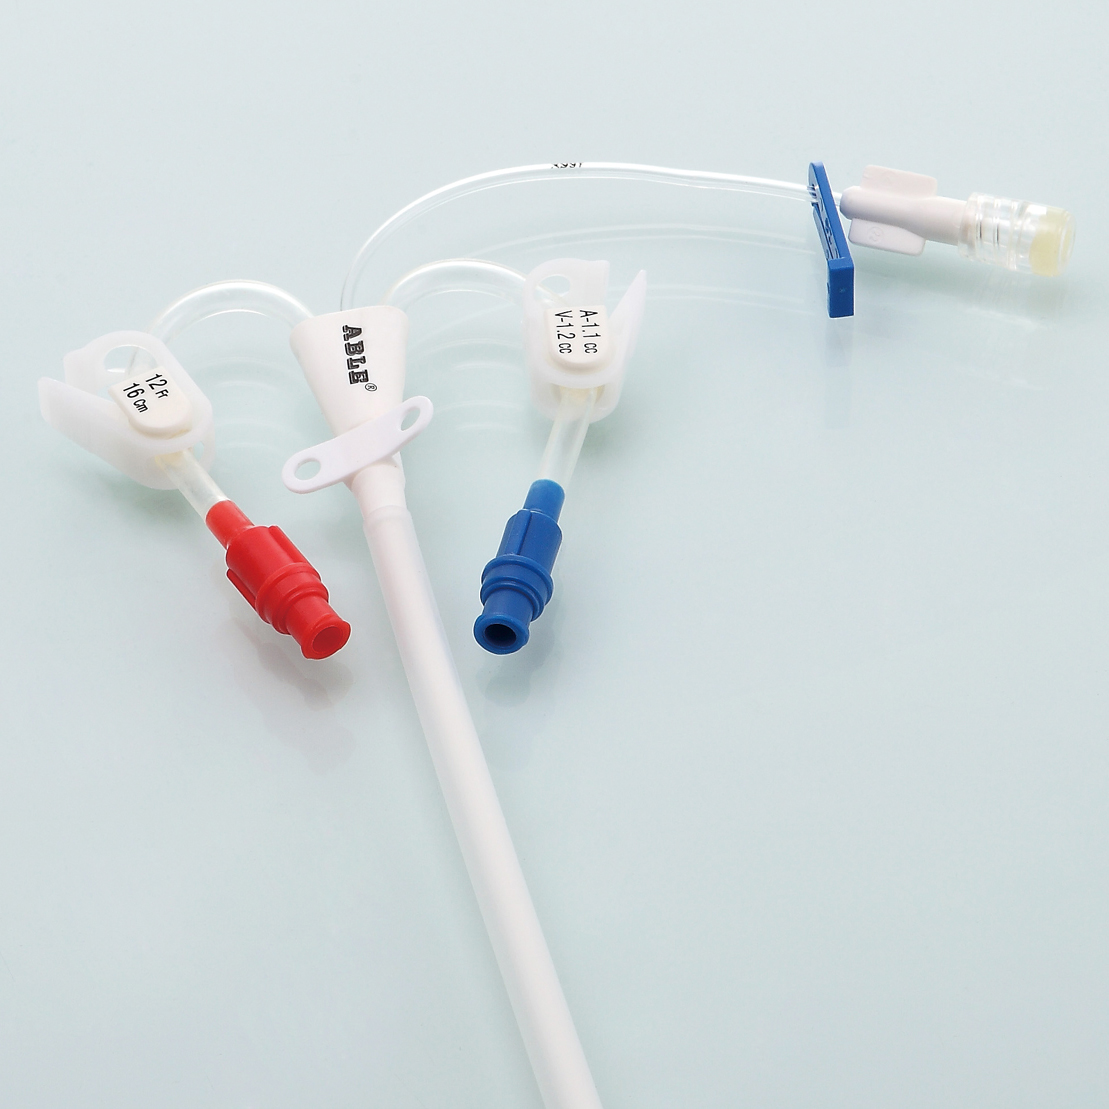 Hemodialysis Catheter Kit